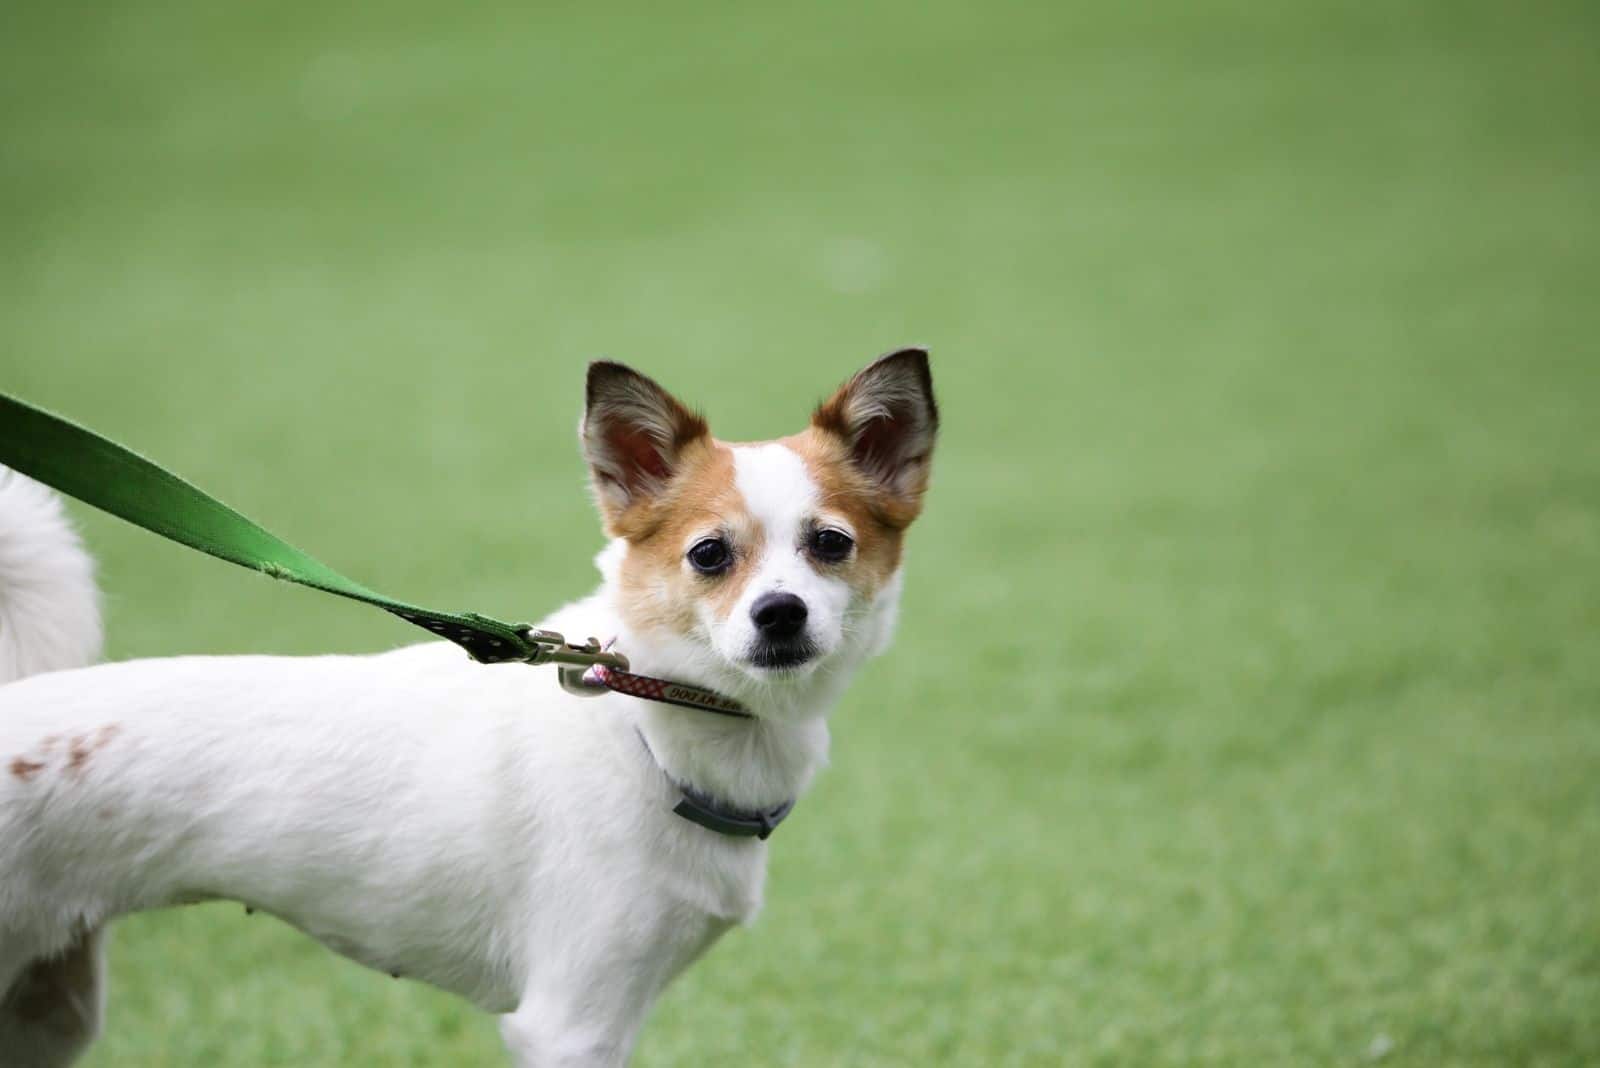 corgi shih tzu mix breed dog with a leash standing outdoors